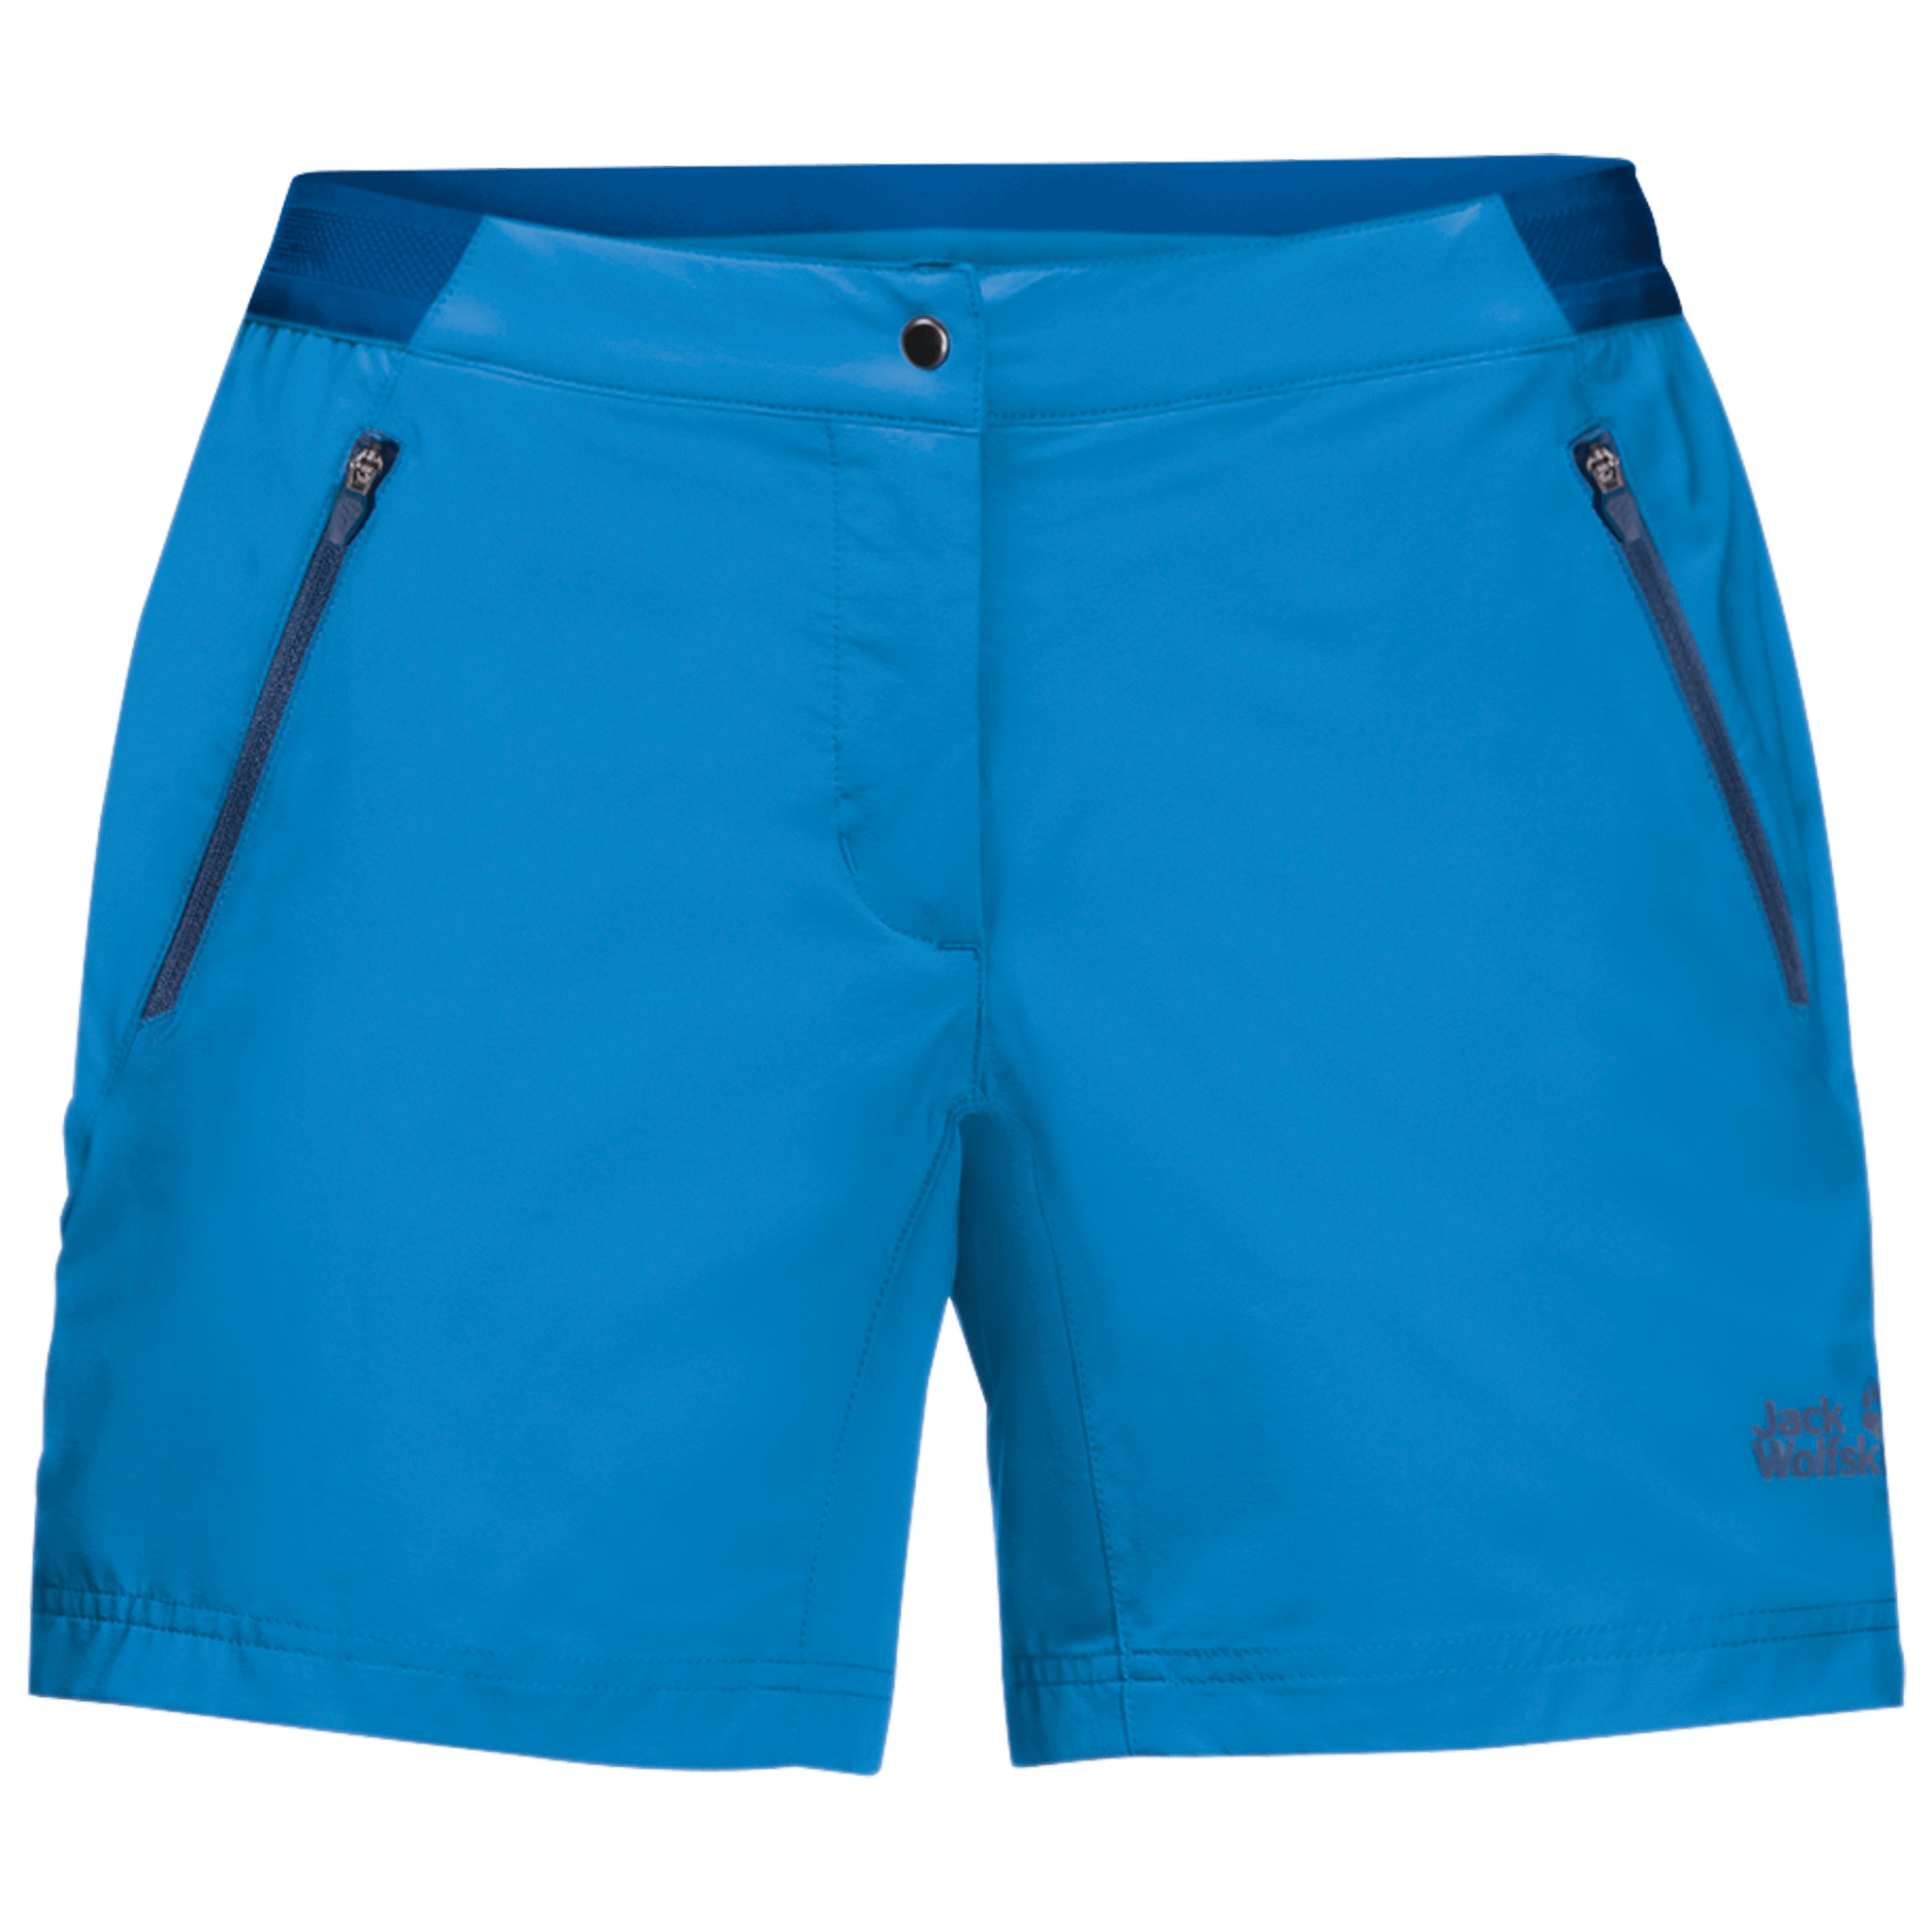 Brilliant Blue Hiking Shorts Women